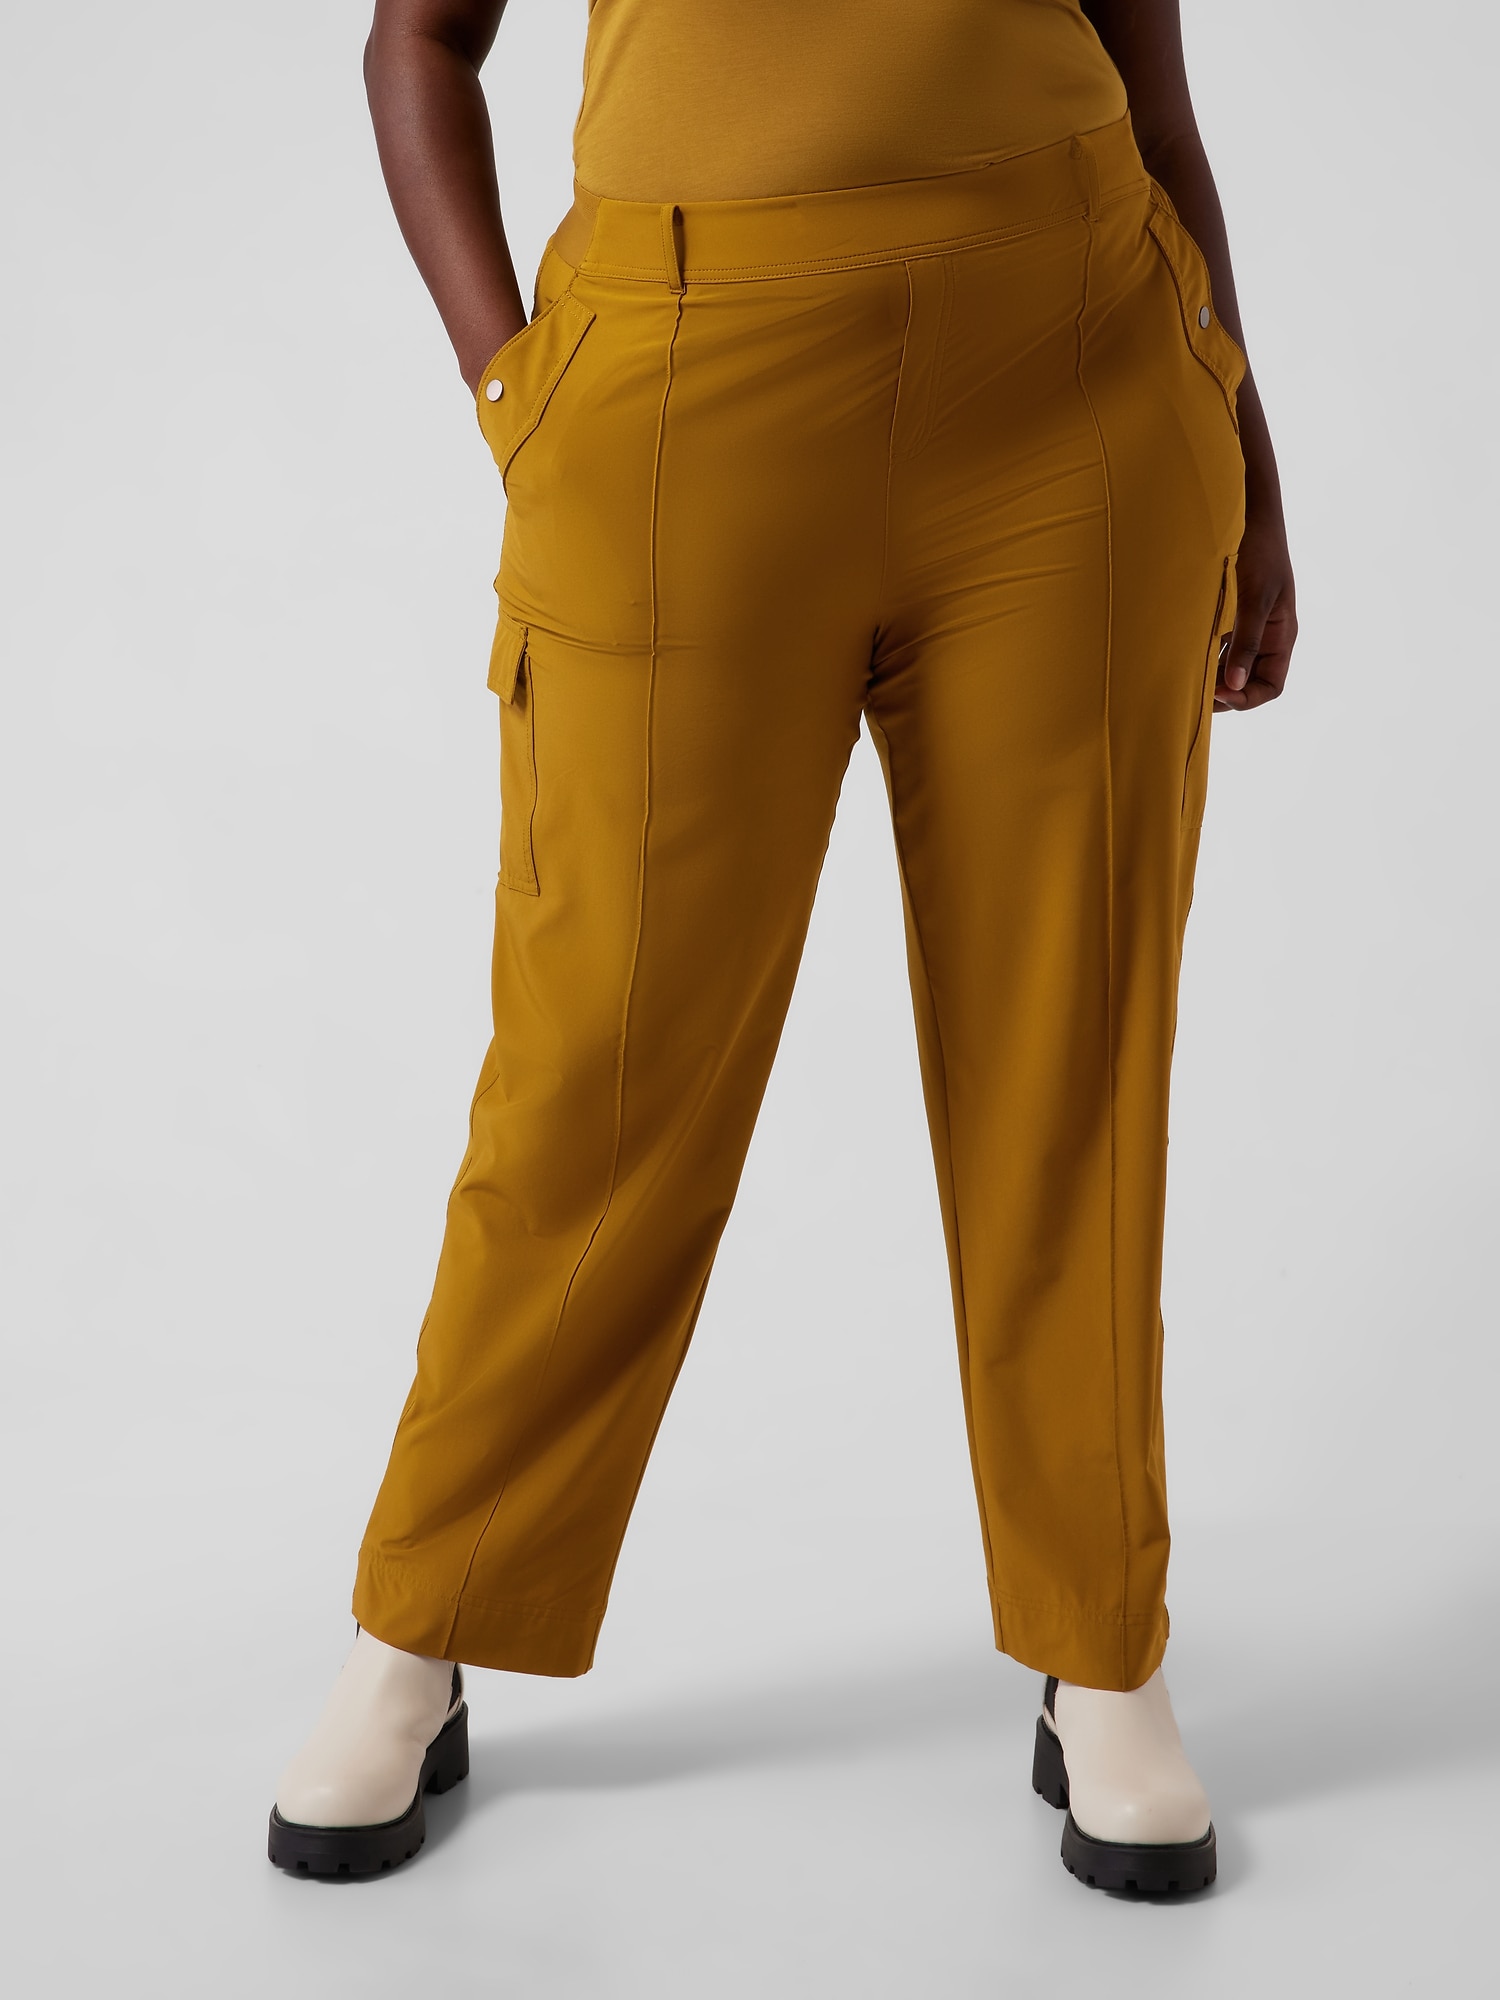 Athleta Dipper 2 Cargo Pants  Clothes design, Pant shopping, Pants